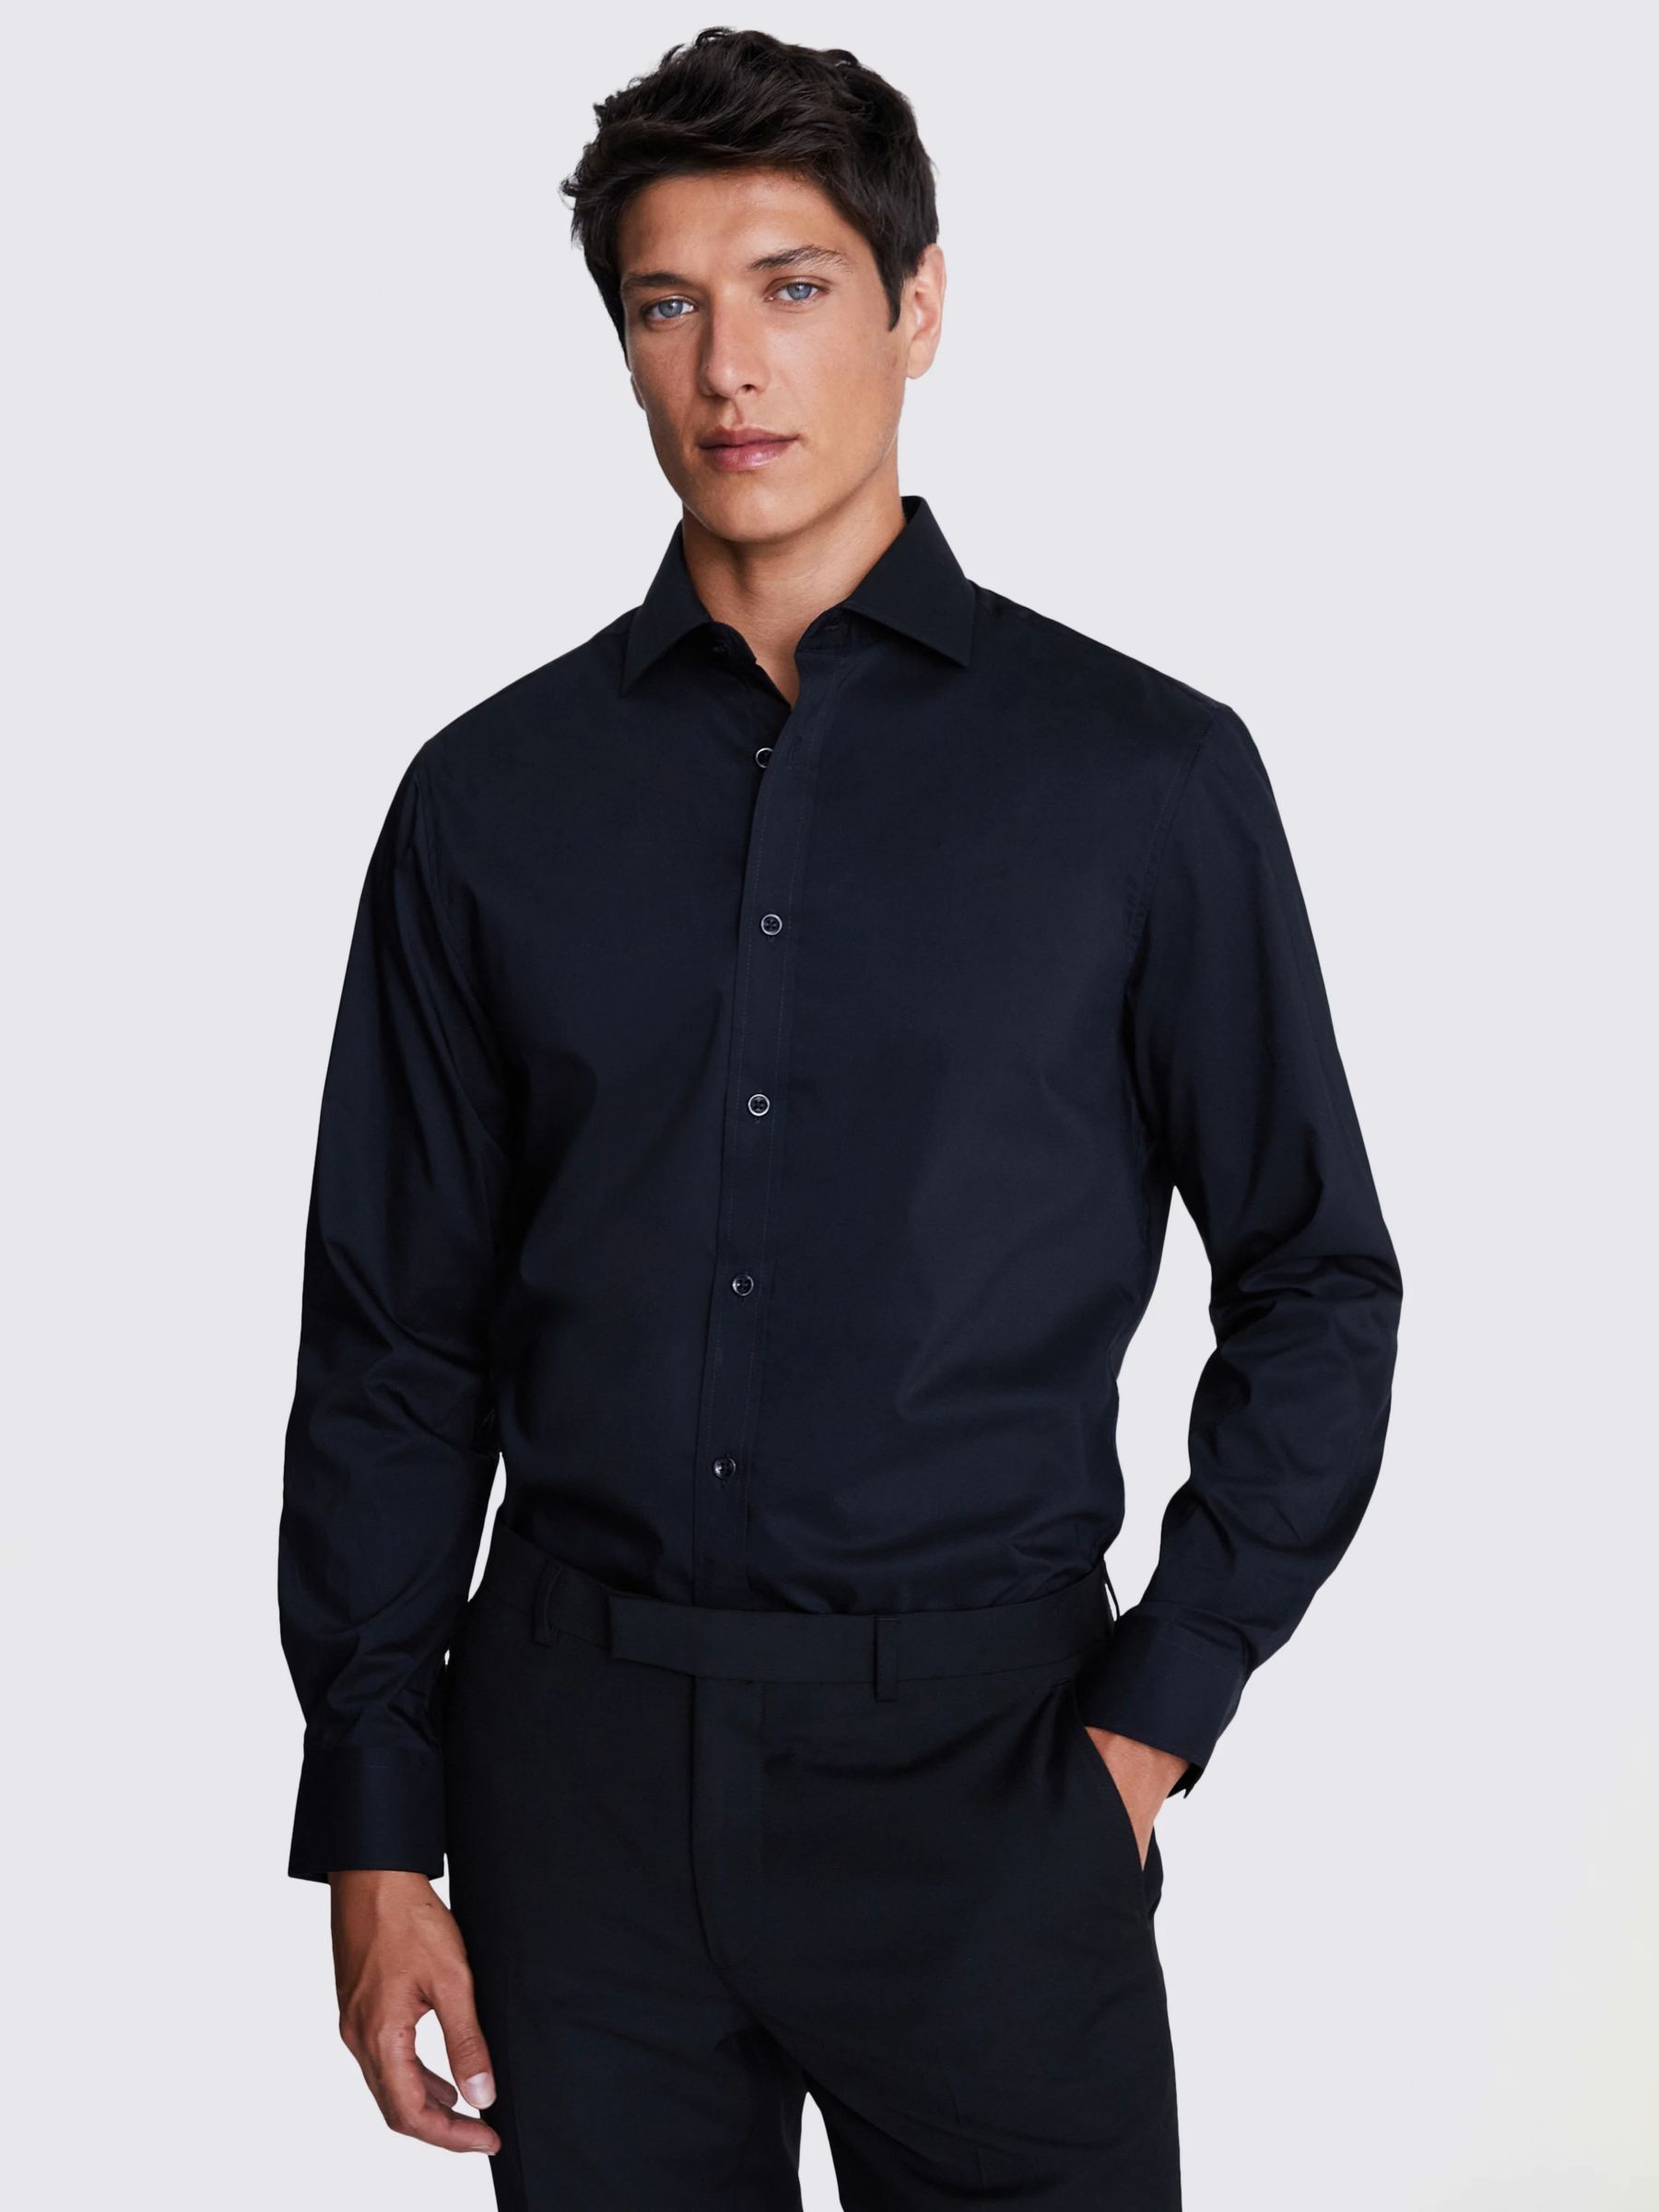 Moss Tailored Stretch Shirt, Black at John Lewis & Partners